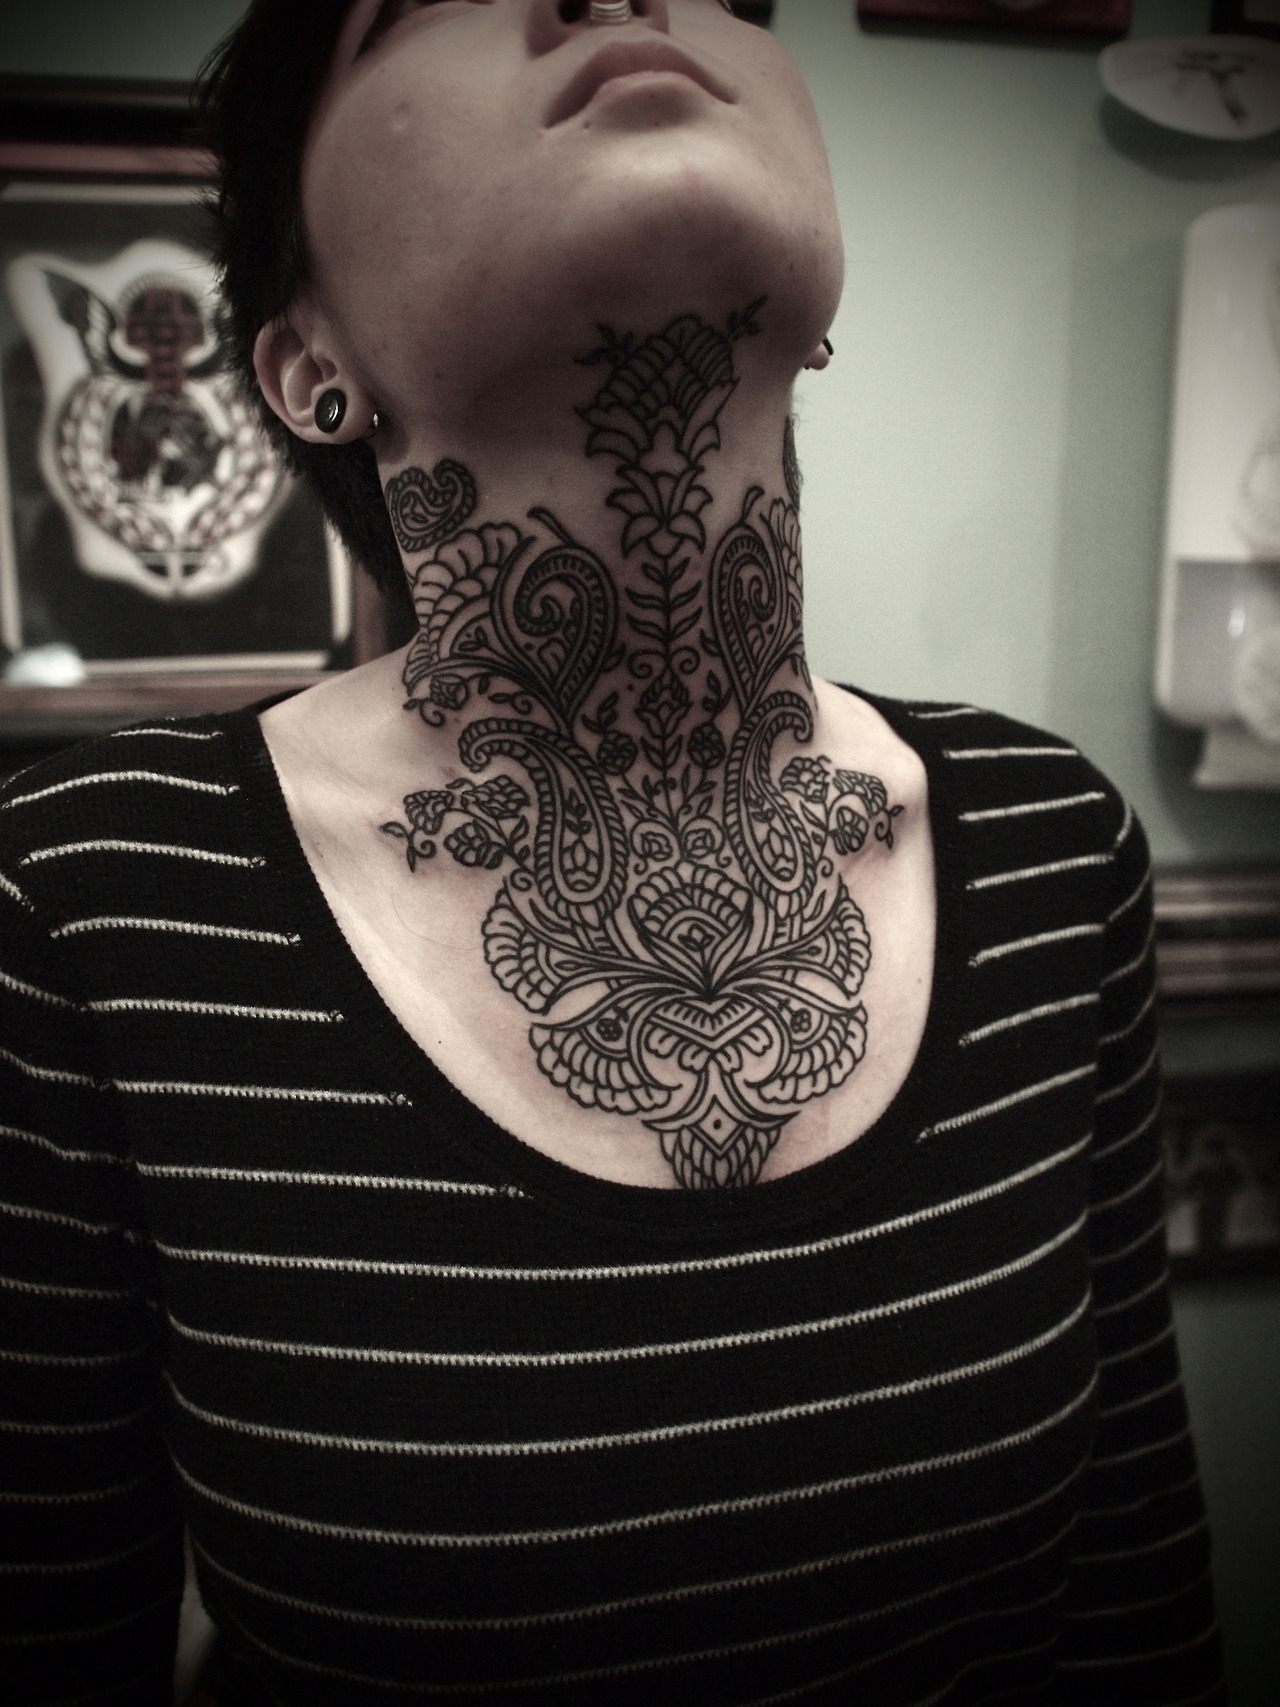 Amazing neck tattoo